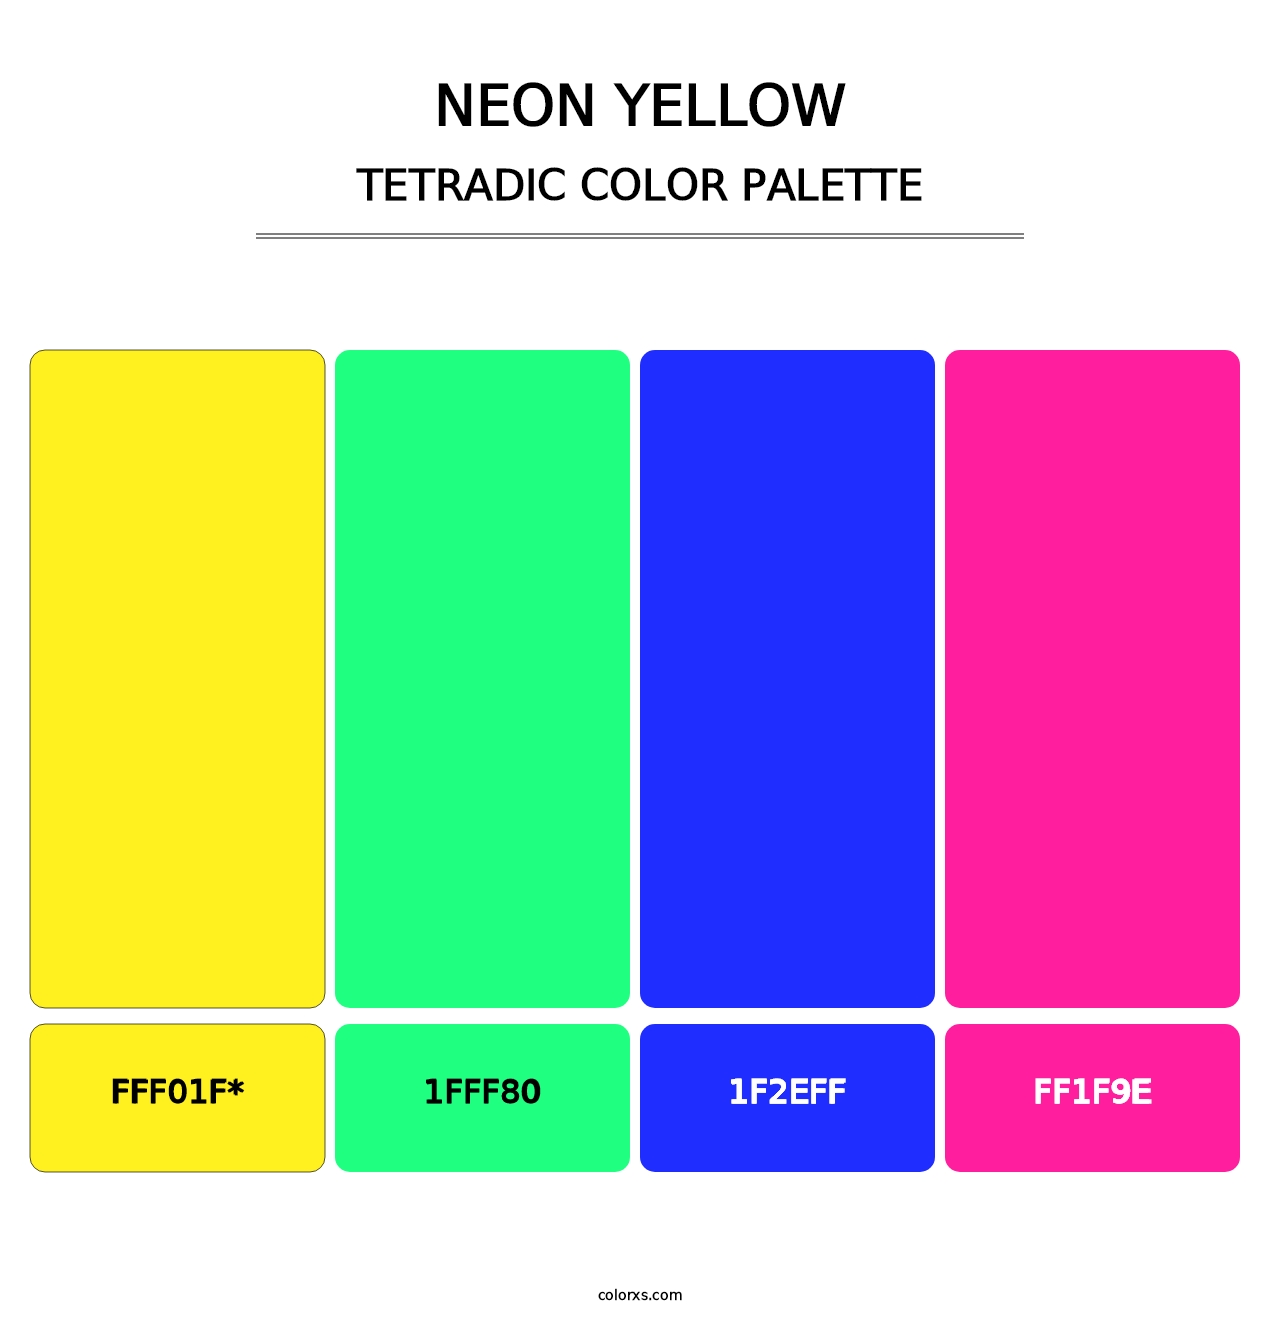 Neon Yellow - Tetradic Color Palette